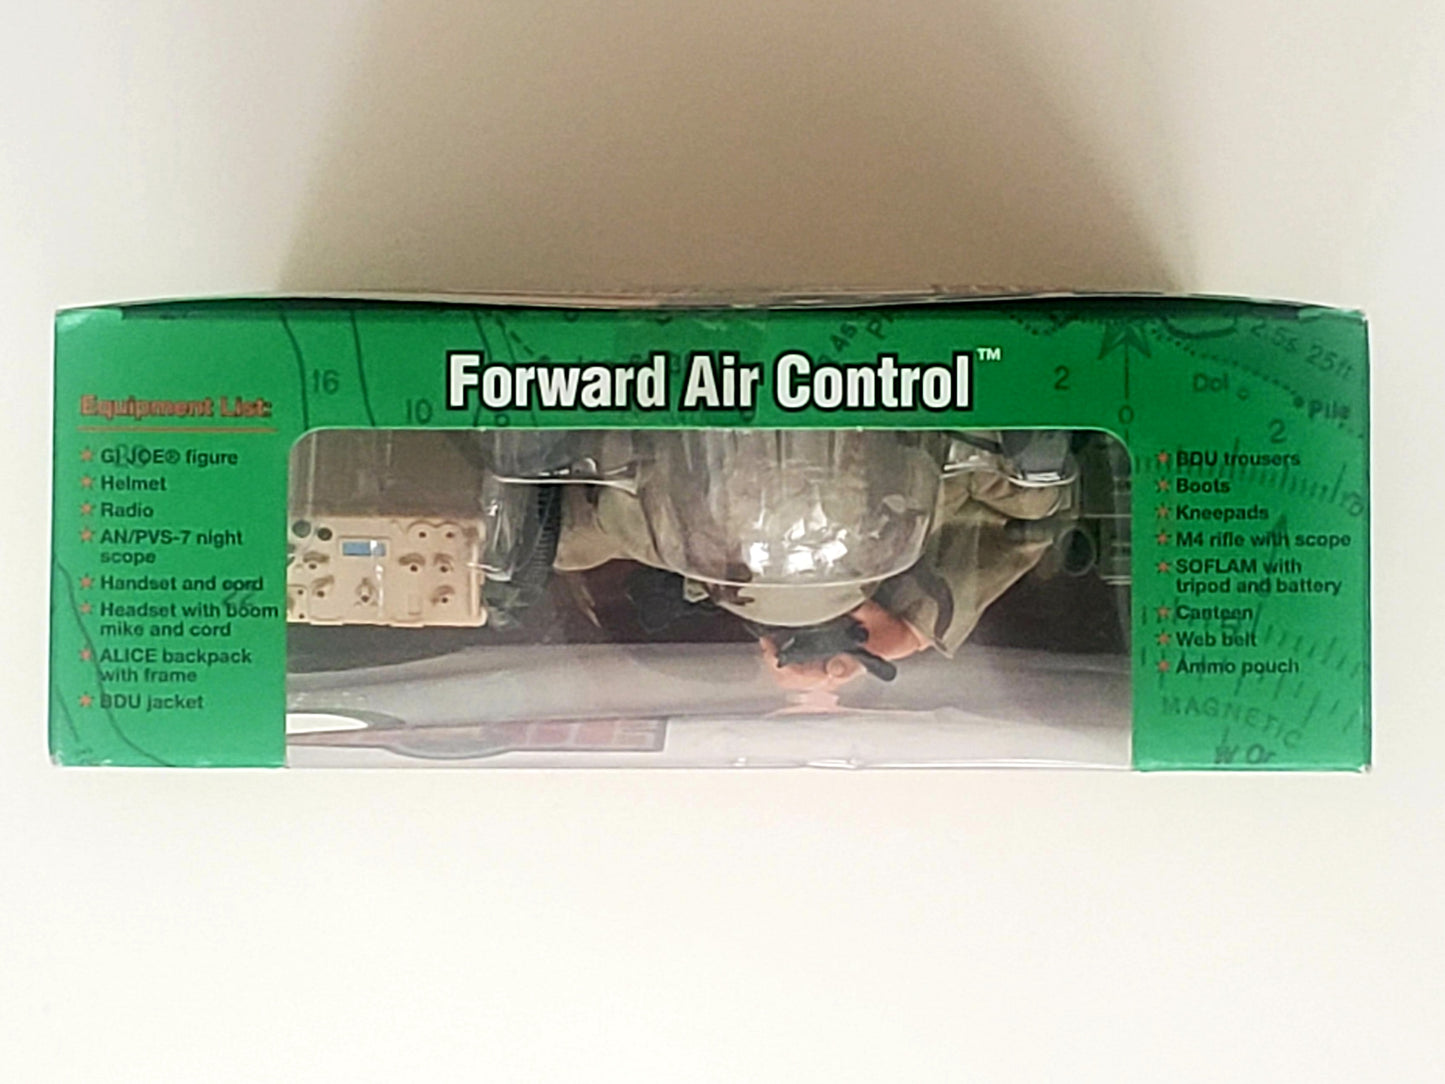 G.I. Joe Forward Air Control 12-Inch Action Figure